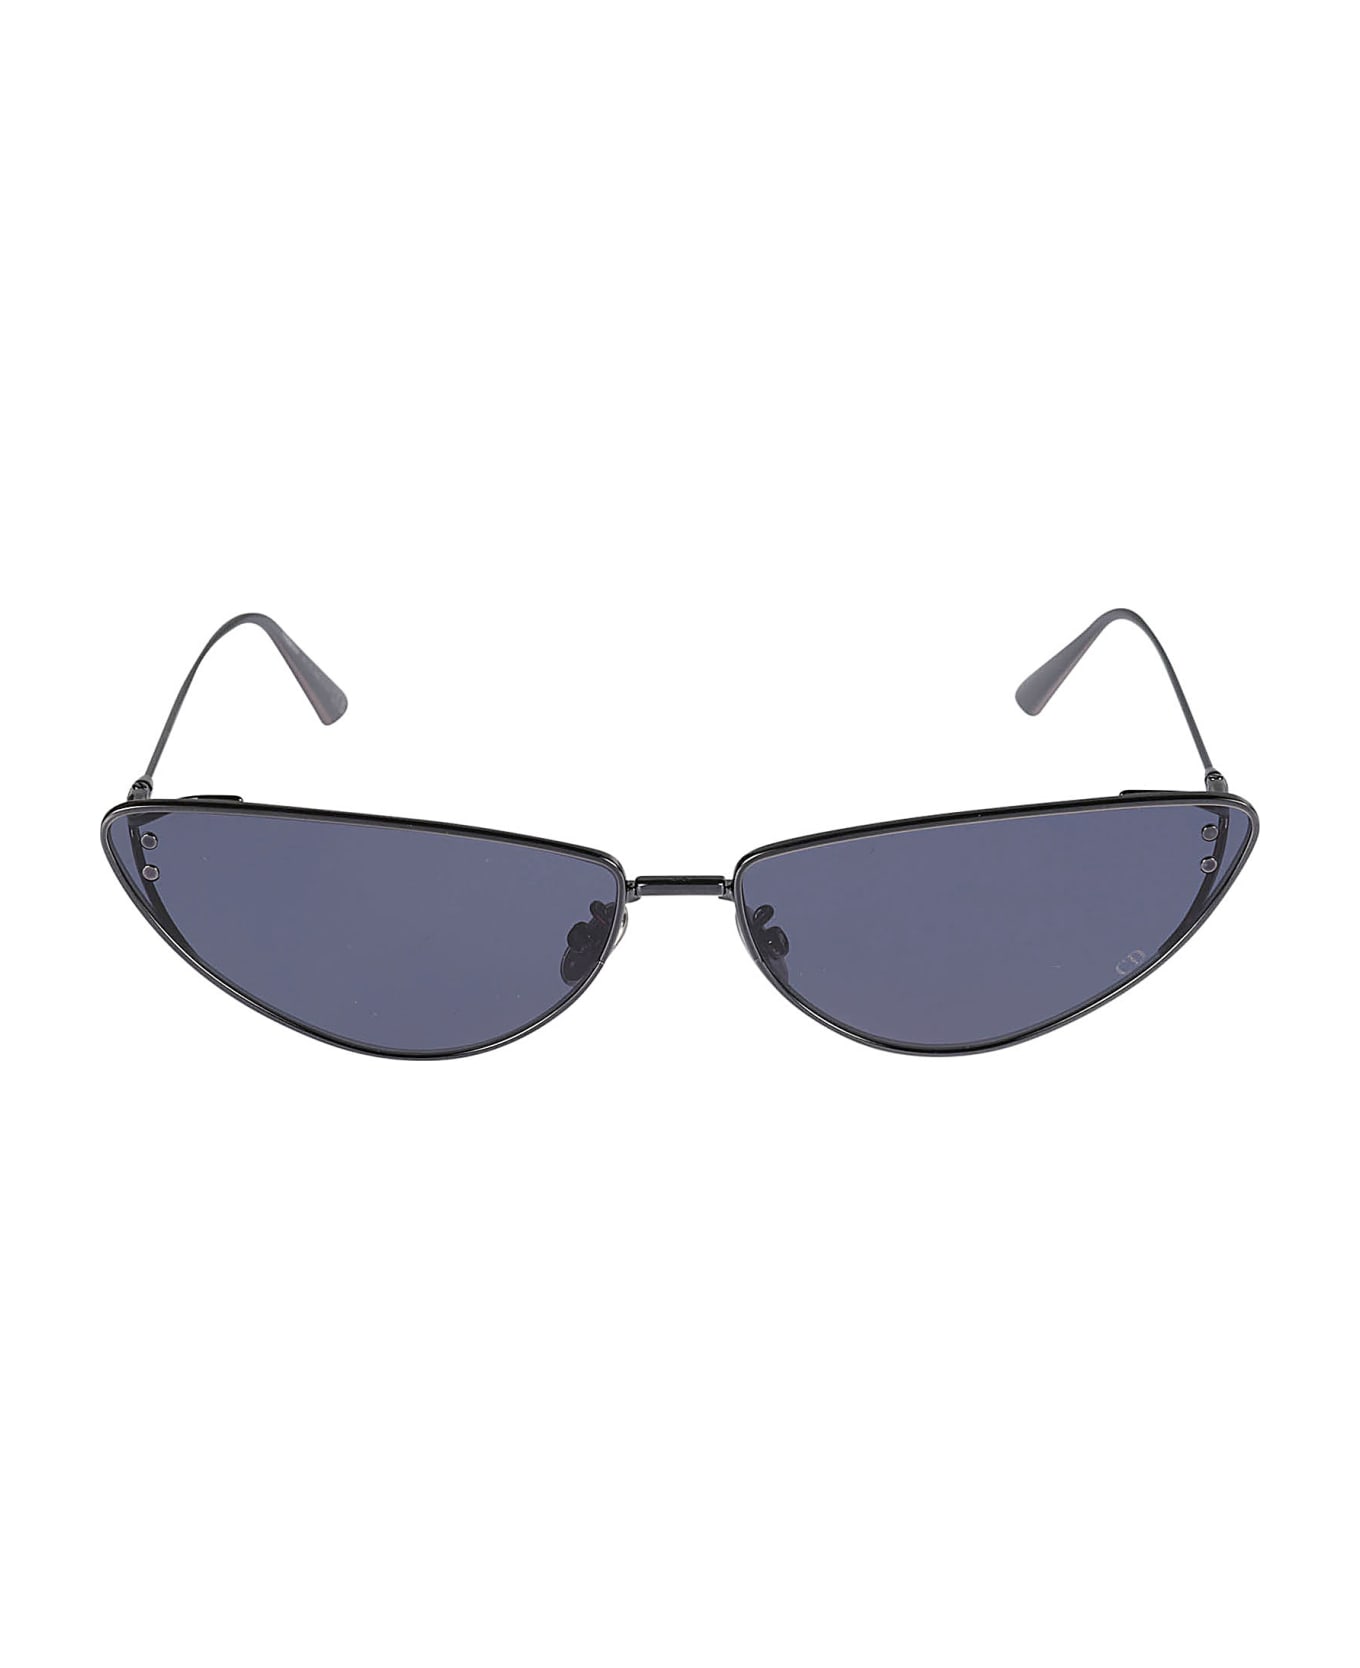 Dior Eyewear Missdior Sunglasses - Nero